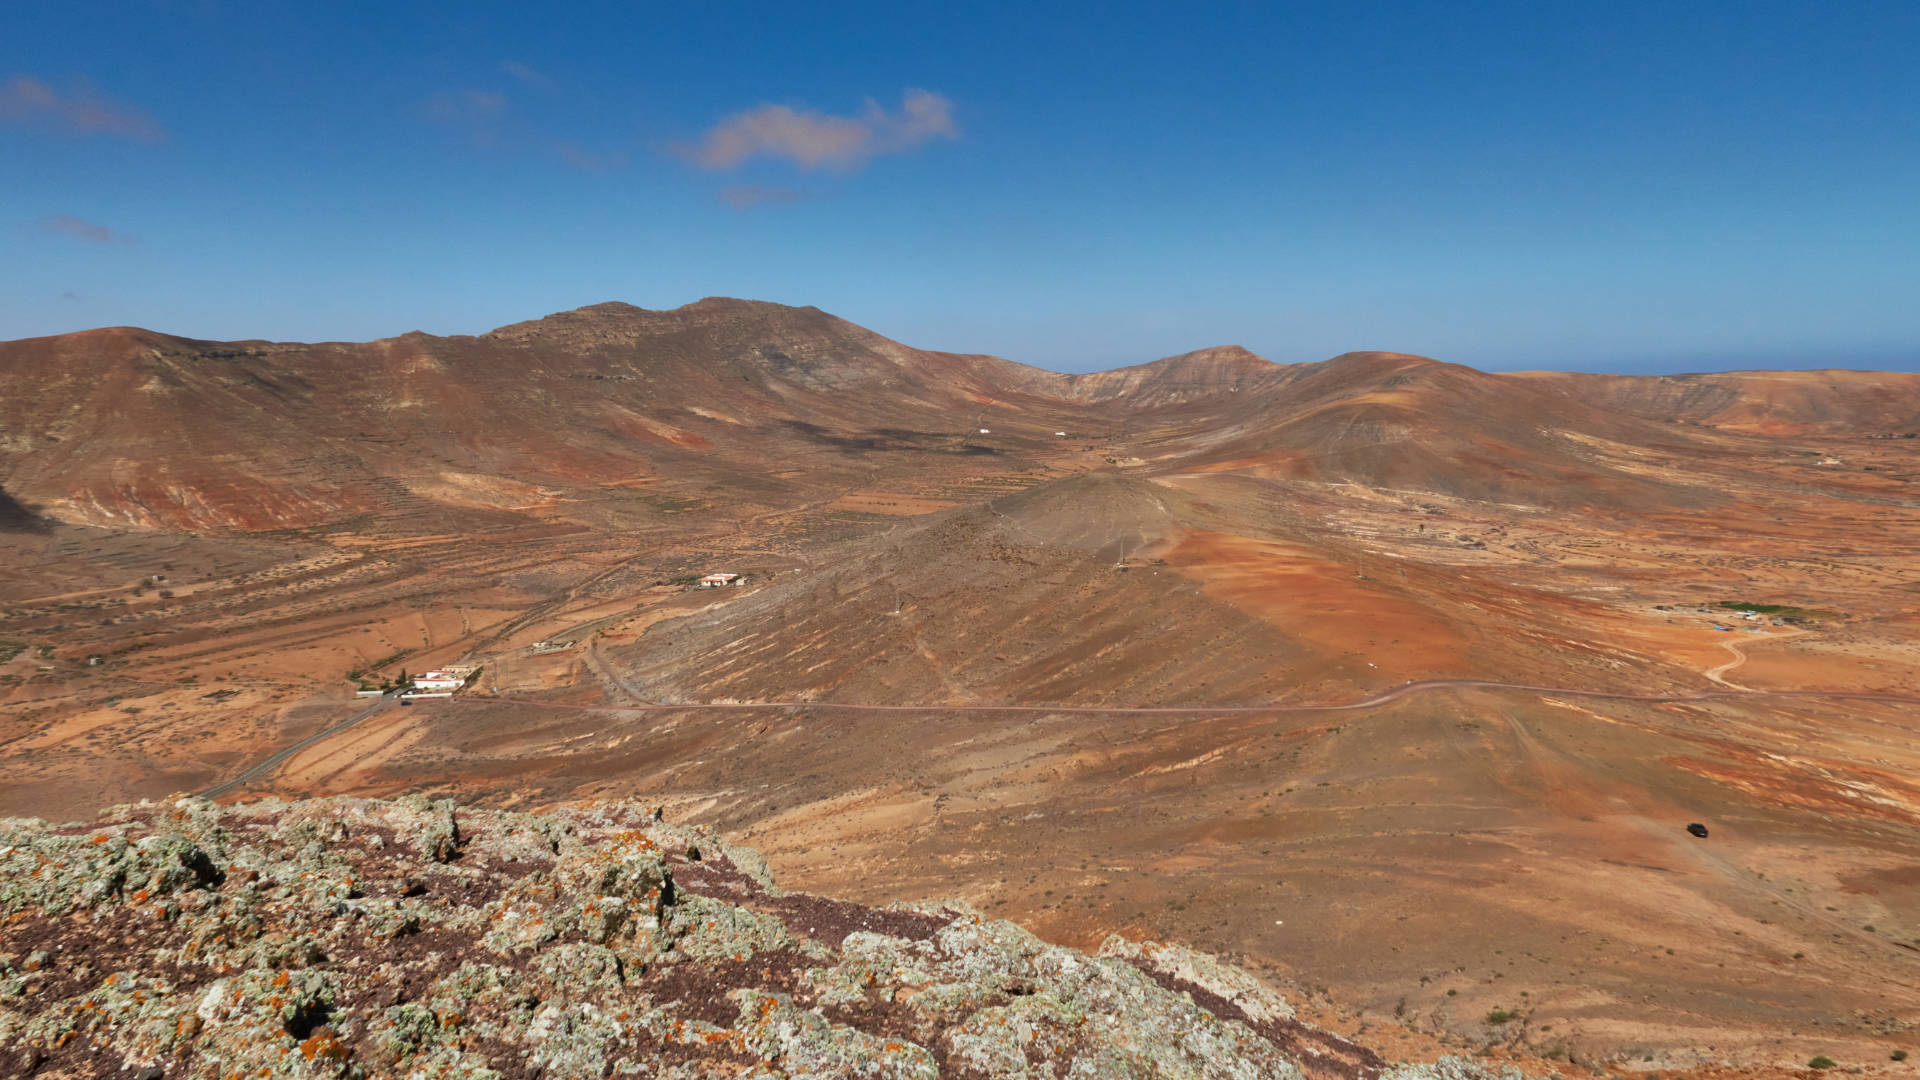 Montaña San Andrés Tetir Fuerteventura.